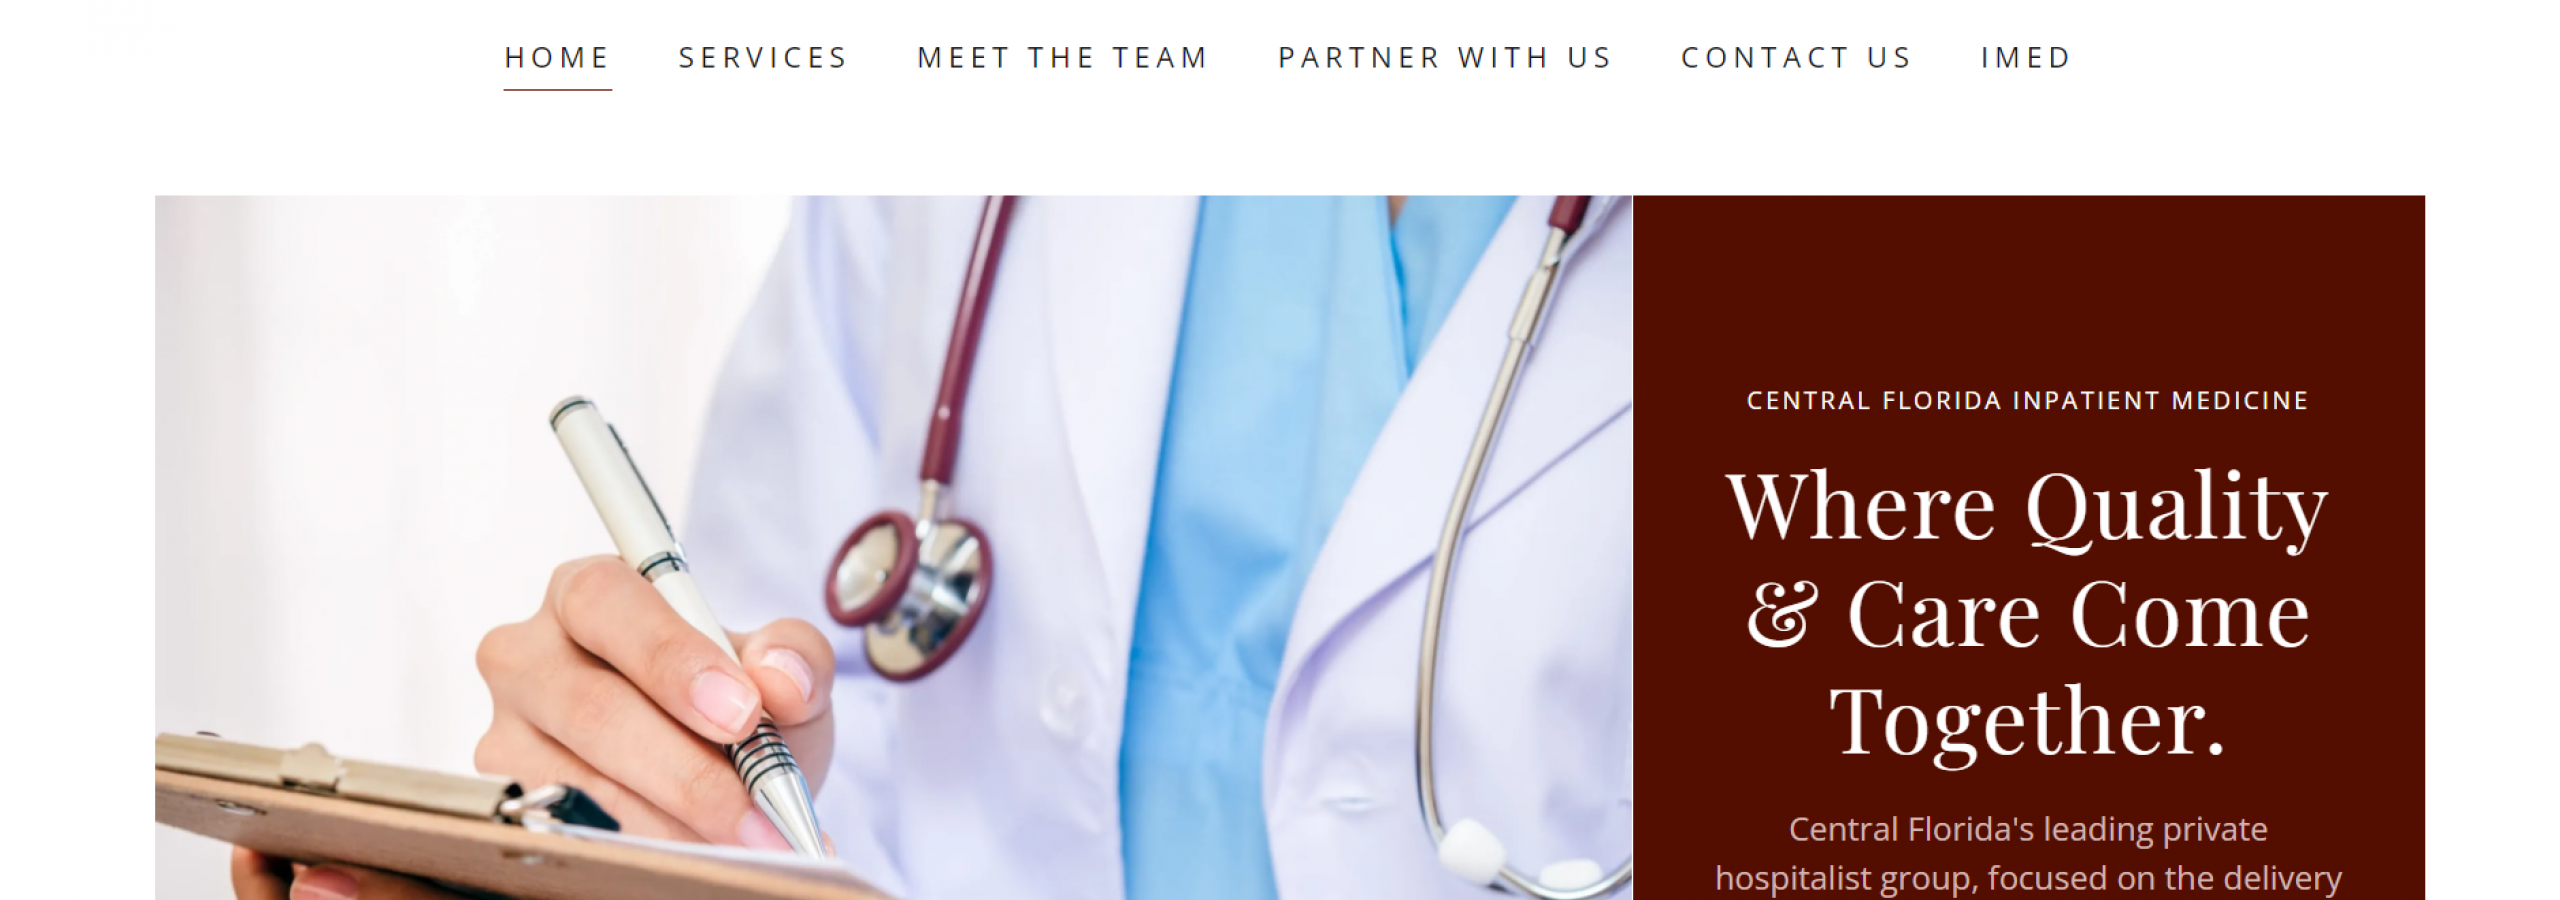 central florida inpatient medicine web site